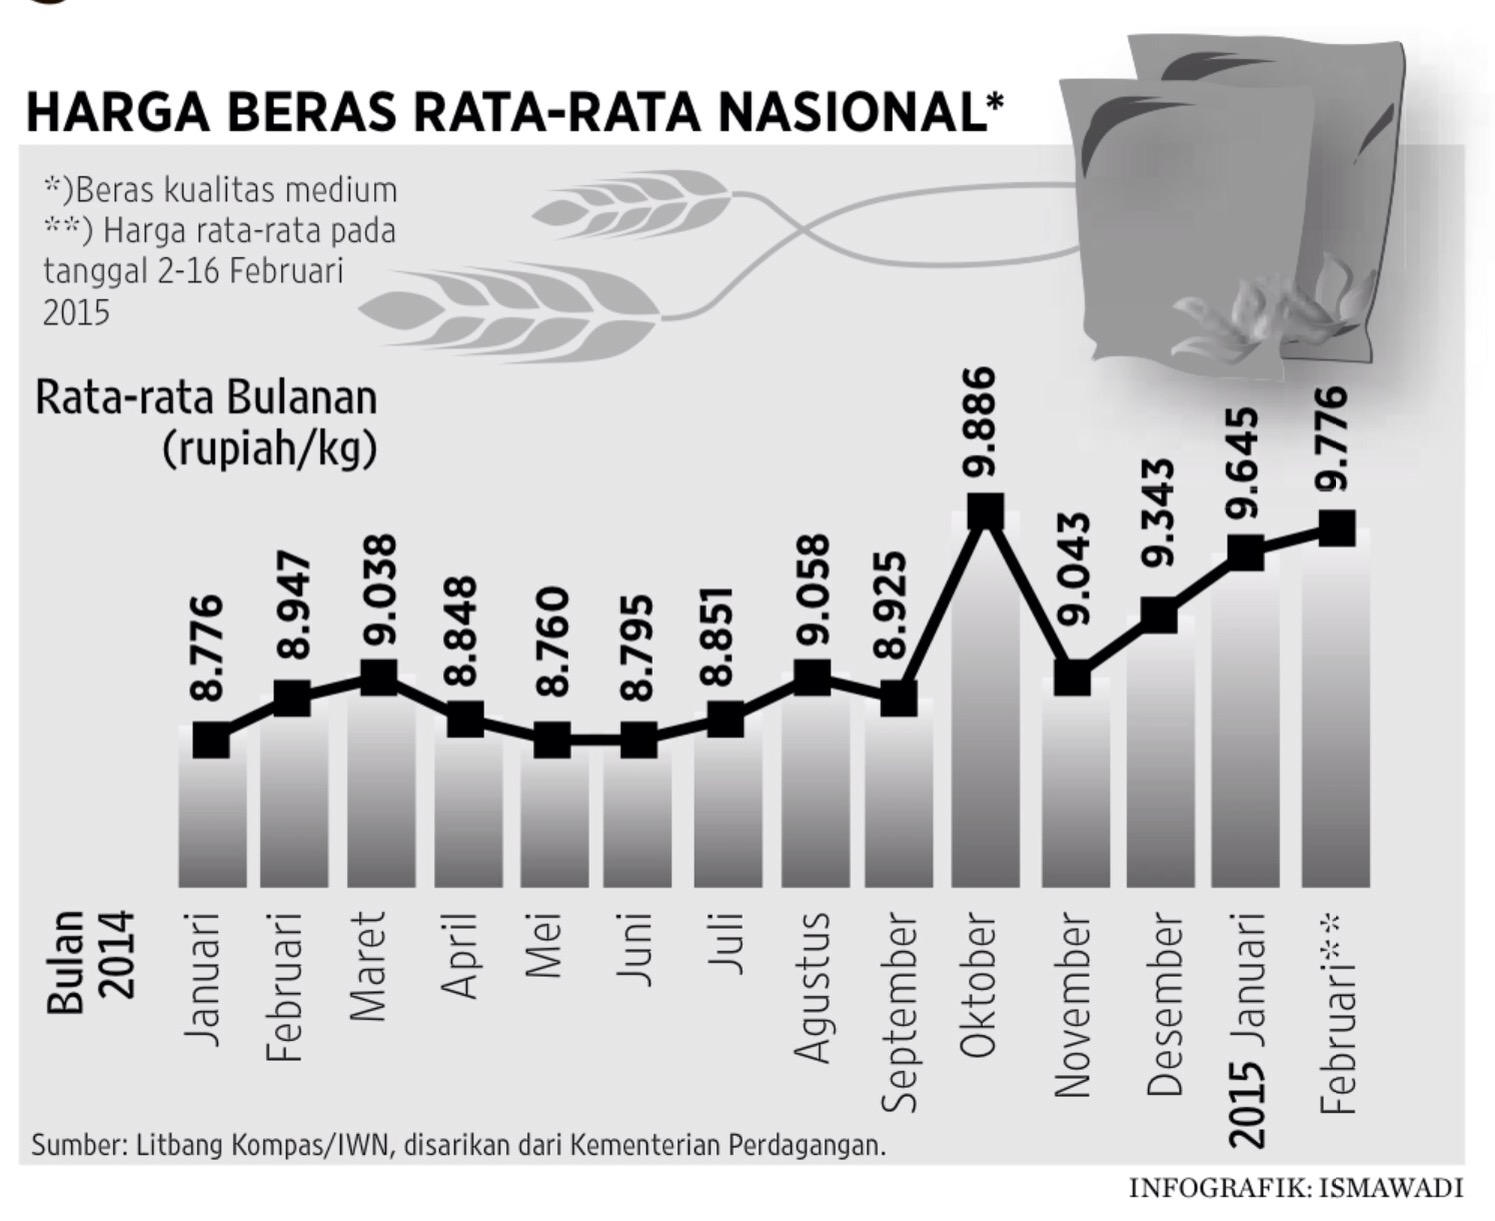 Harga Ratarata Beras Nasional 2014  2015  Infografis Mania